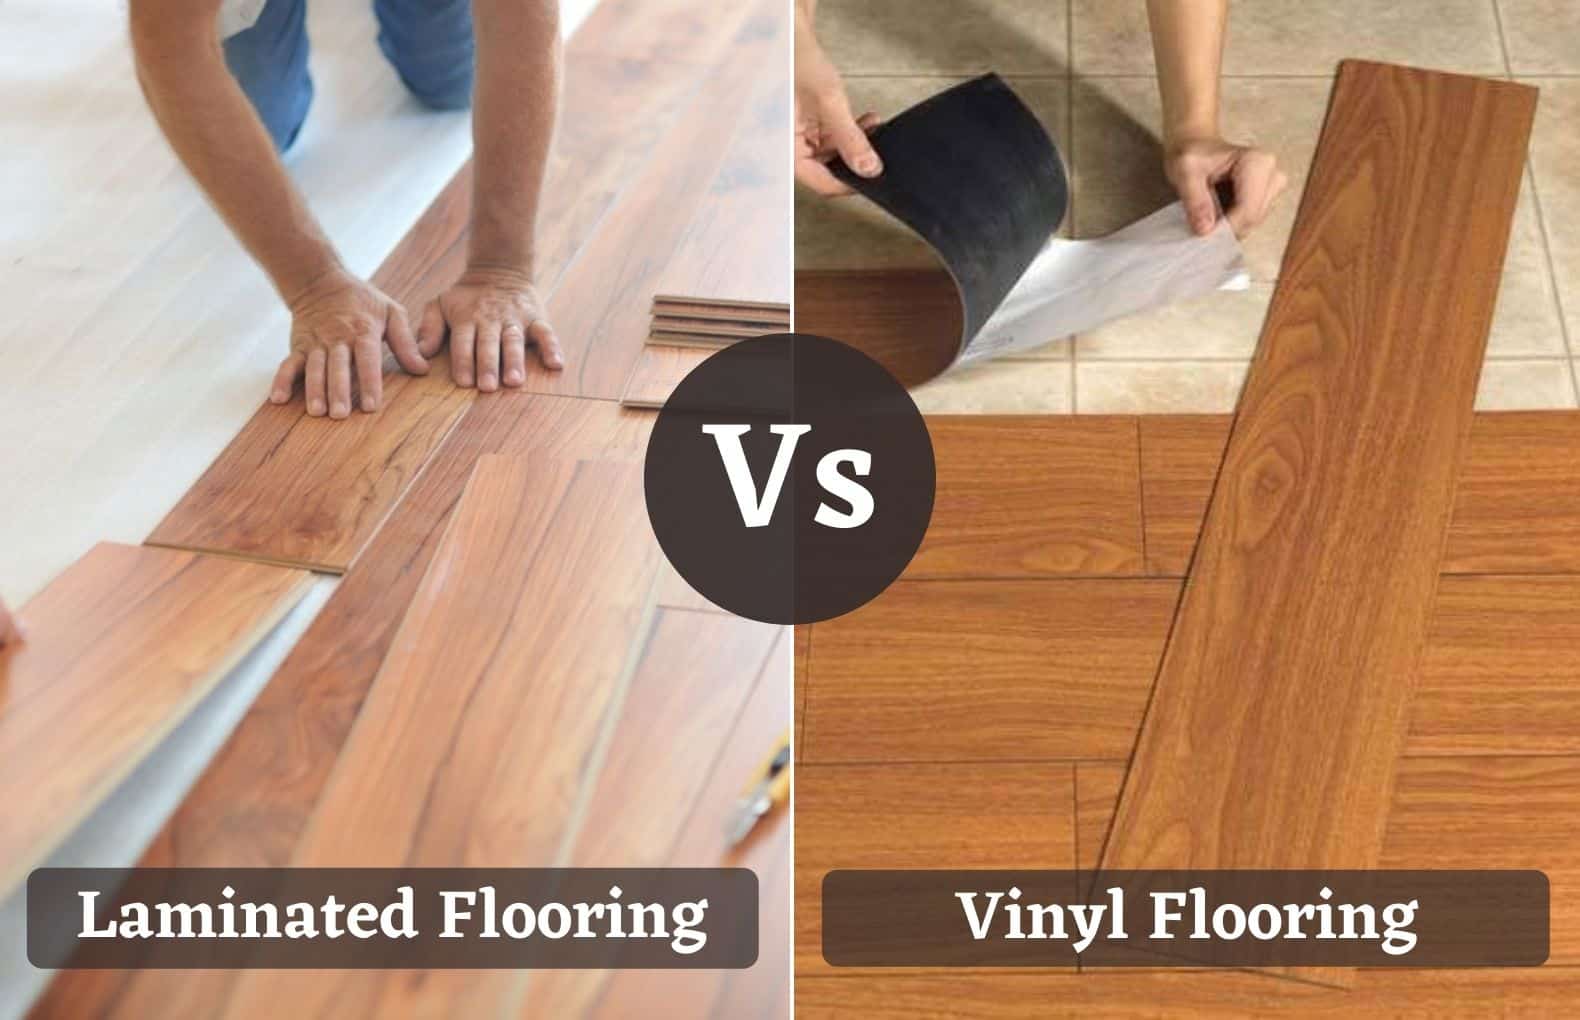 Is vinyl or laminate flooring better?